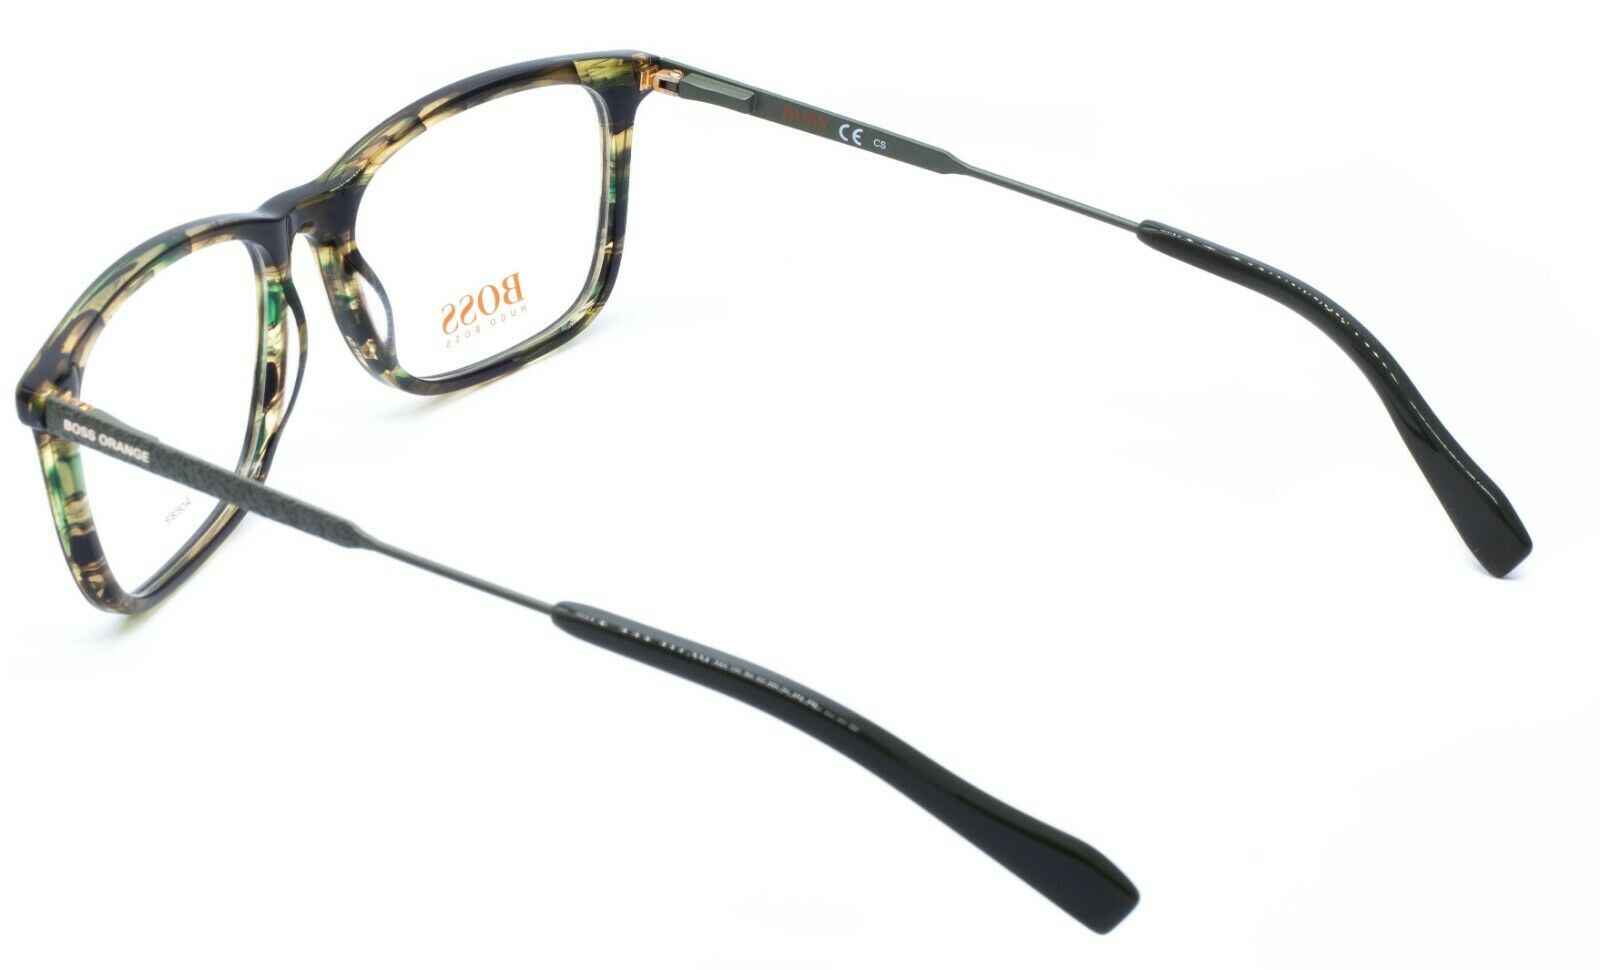 BOSS ORANGE BO 0307 PF3 53mm Eyewear Glasses FRAMES RX Optical Eyeglasses - New